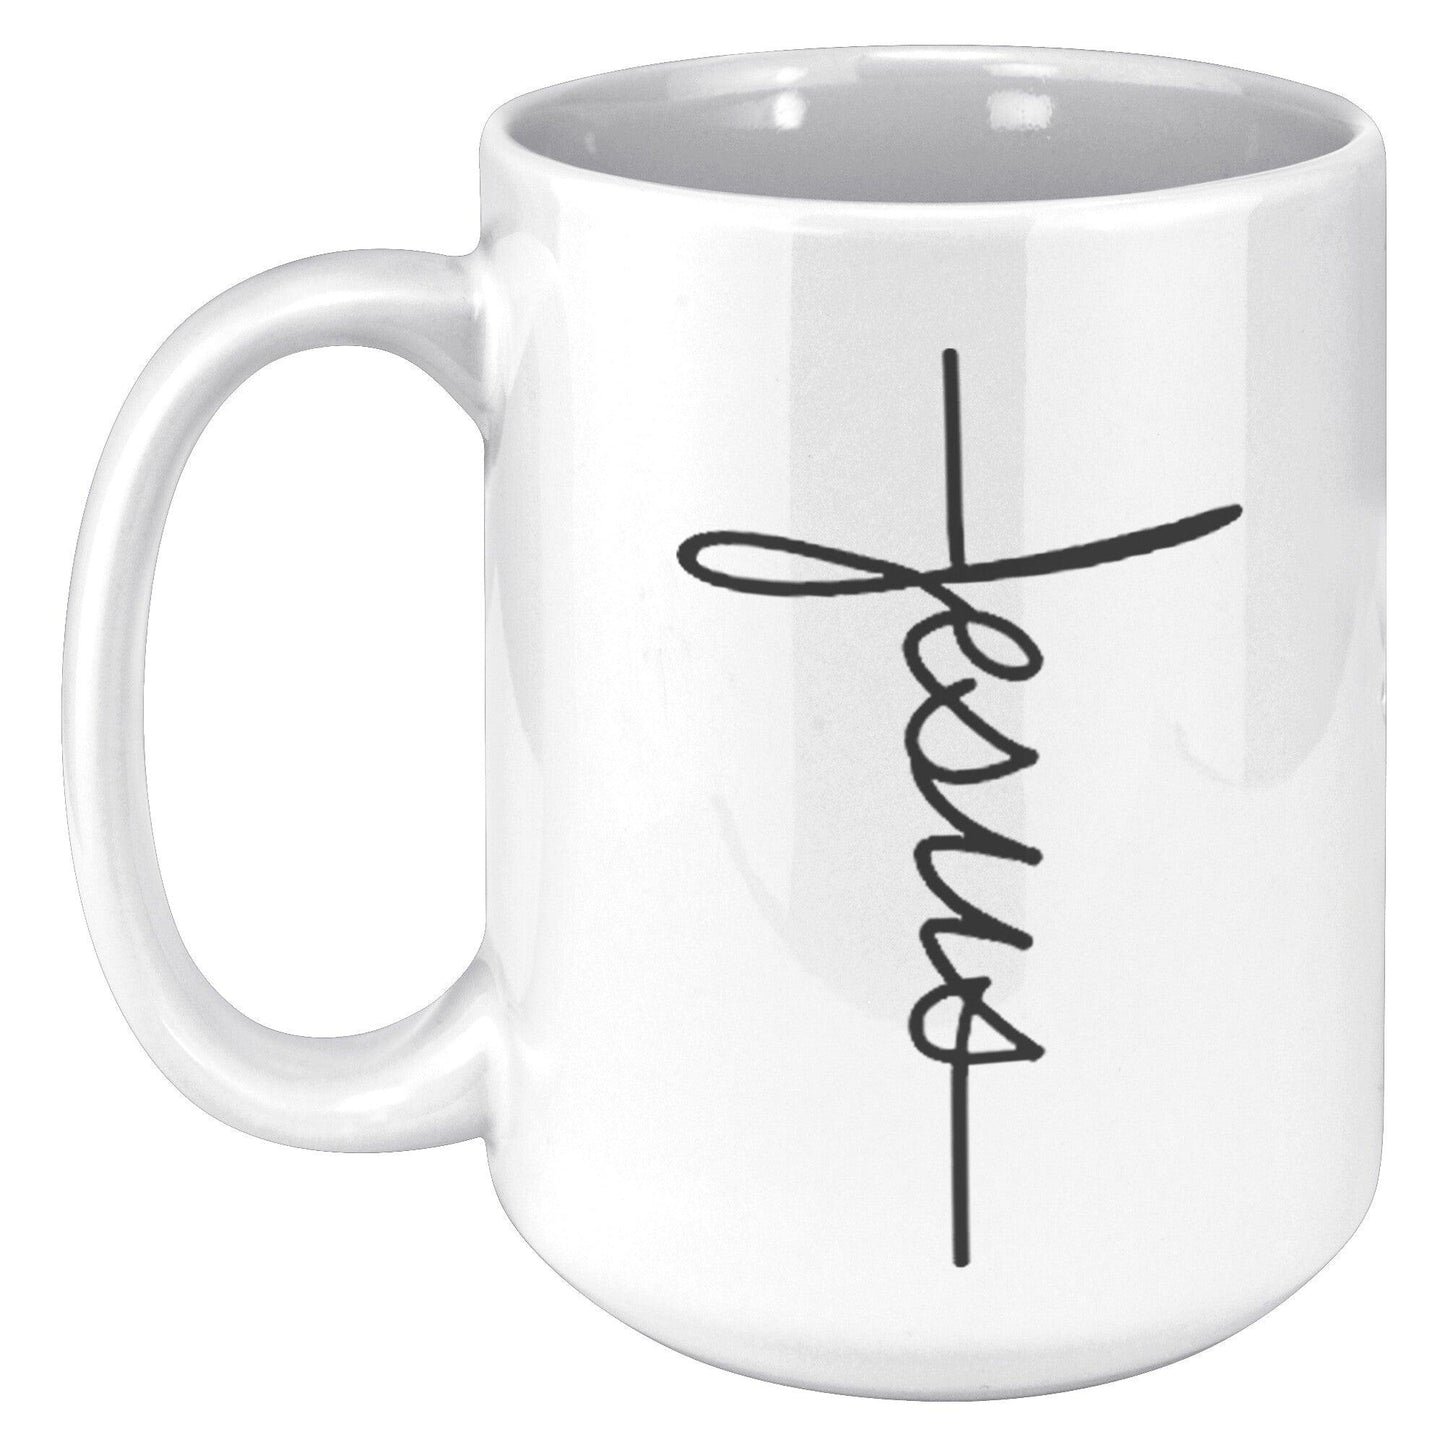 Jesus Cross Sign White Mug - TheGivenGet